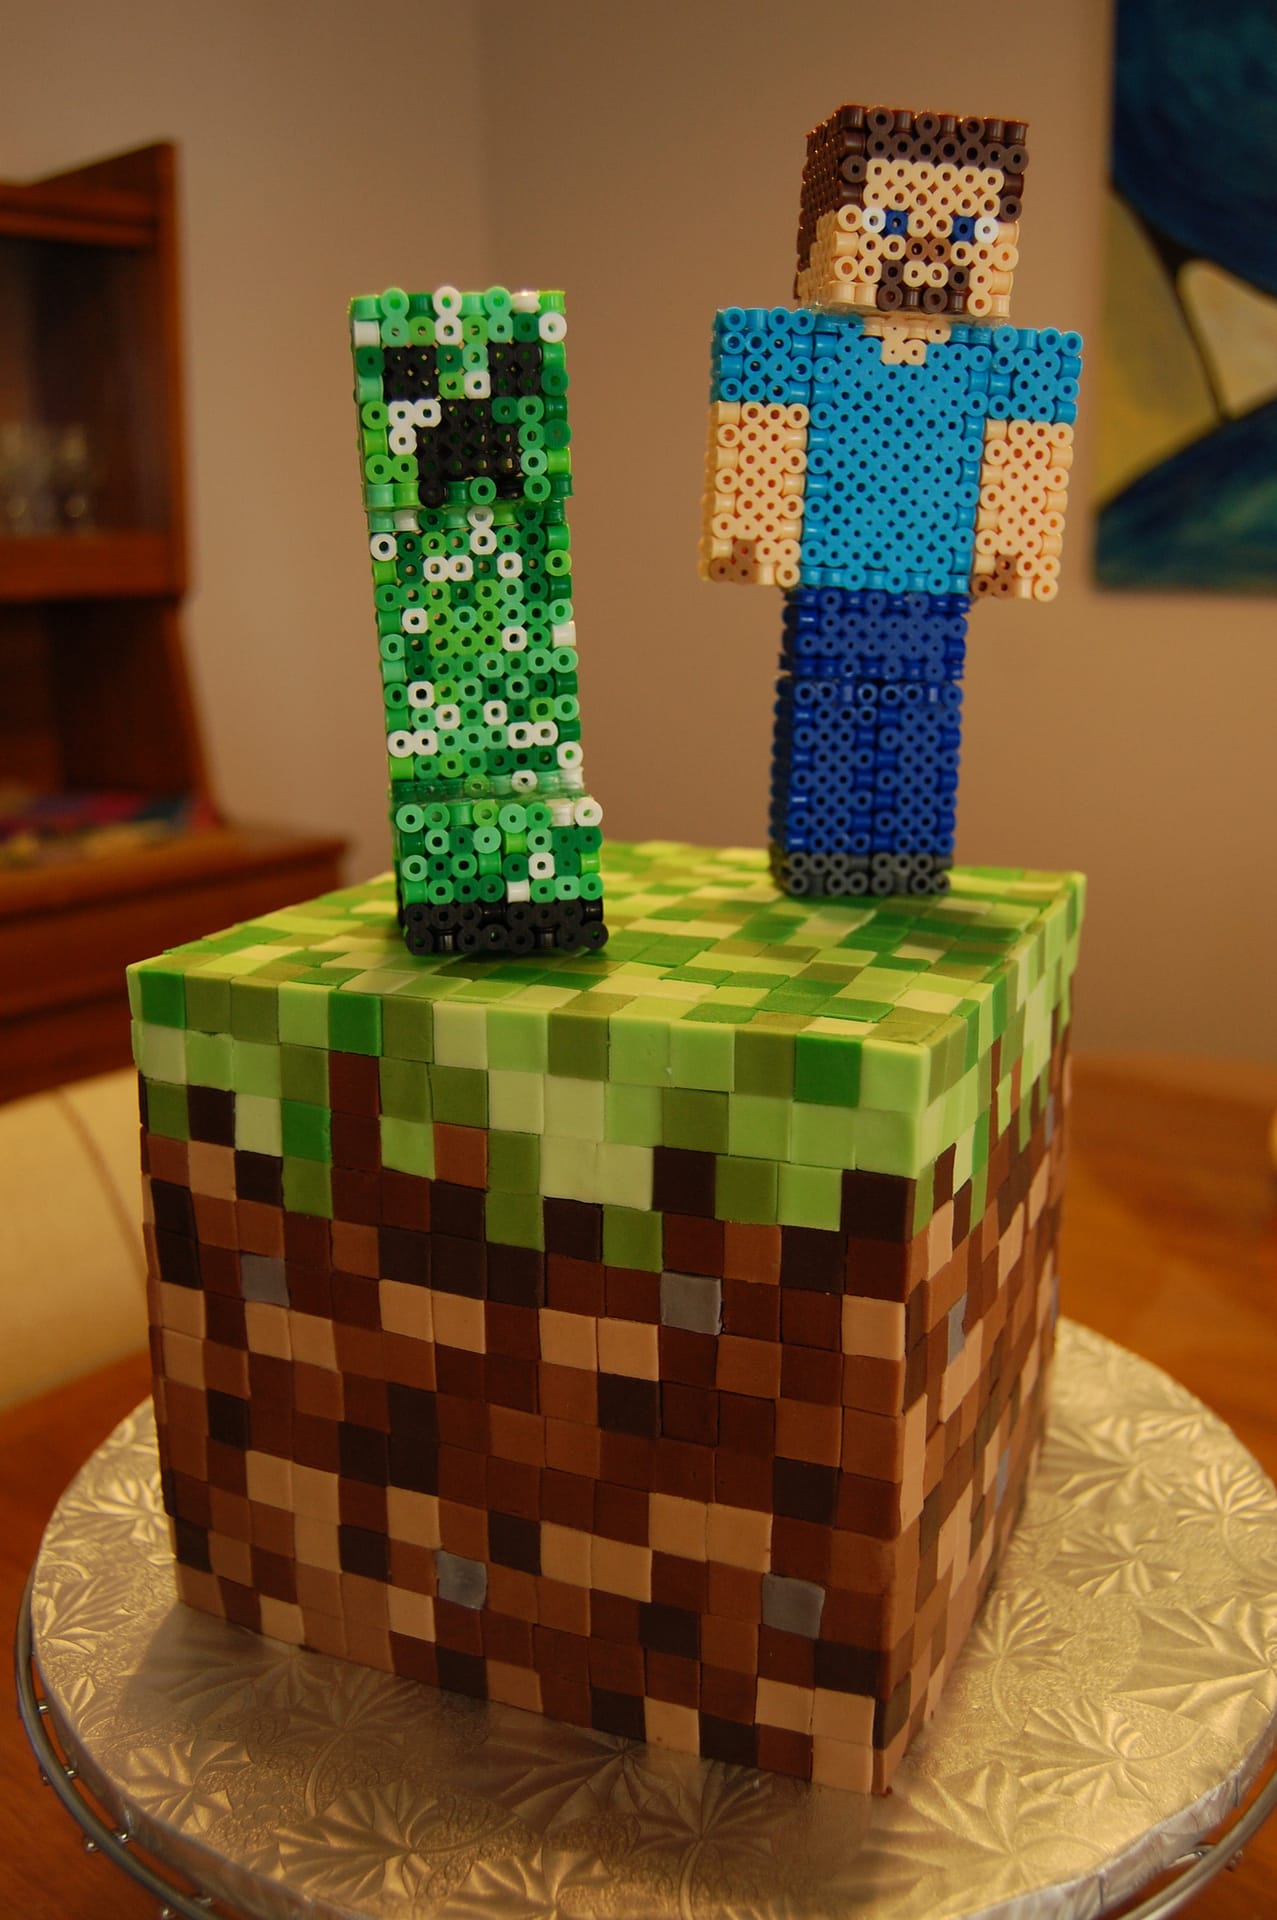 3 impressive Minecraft cakes